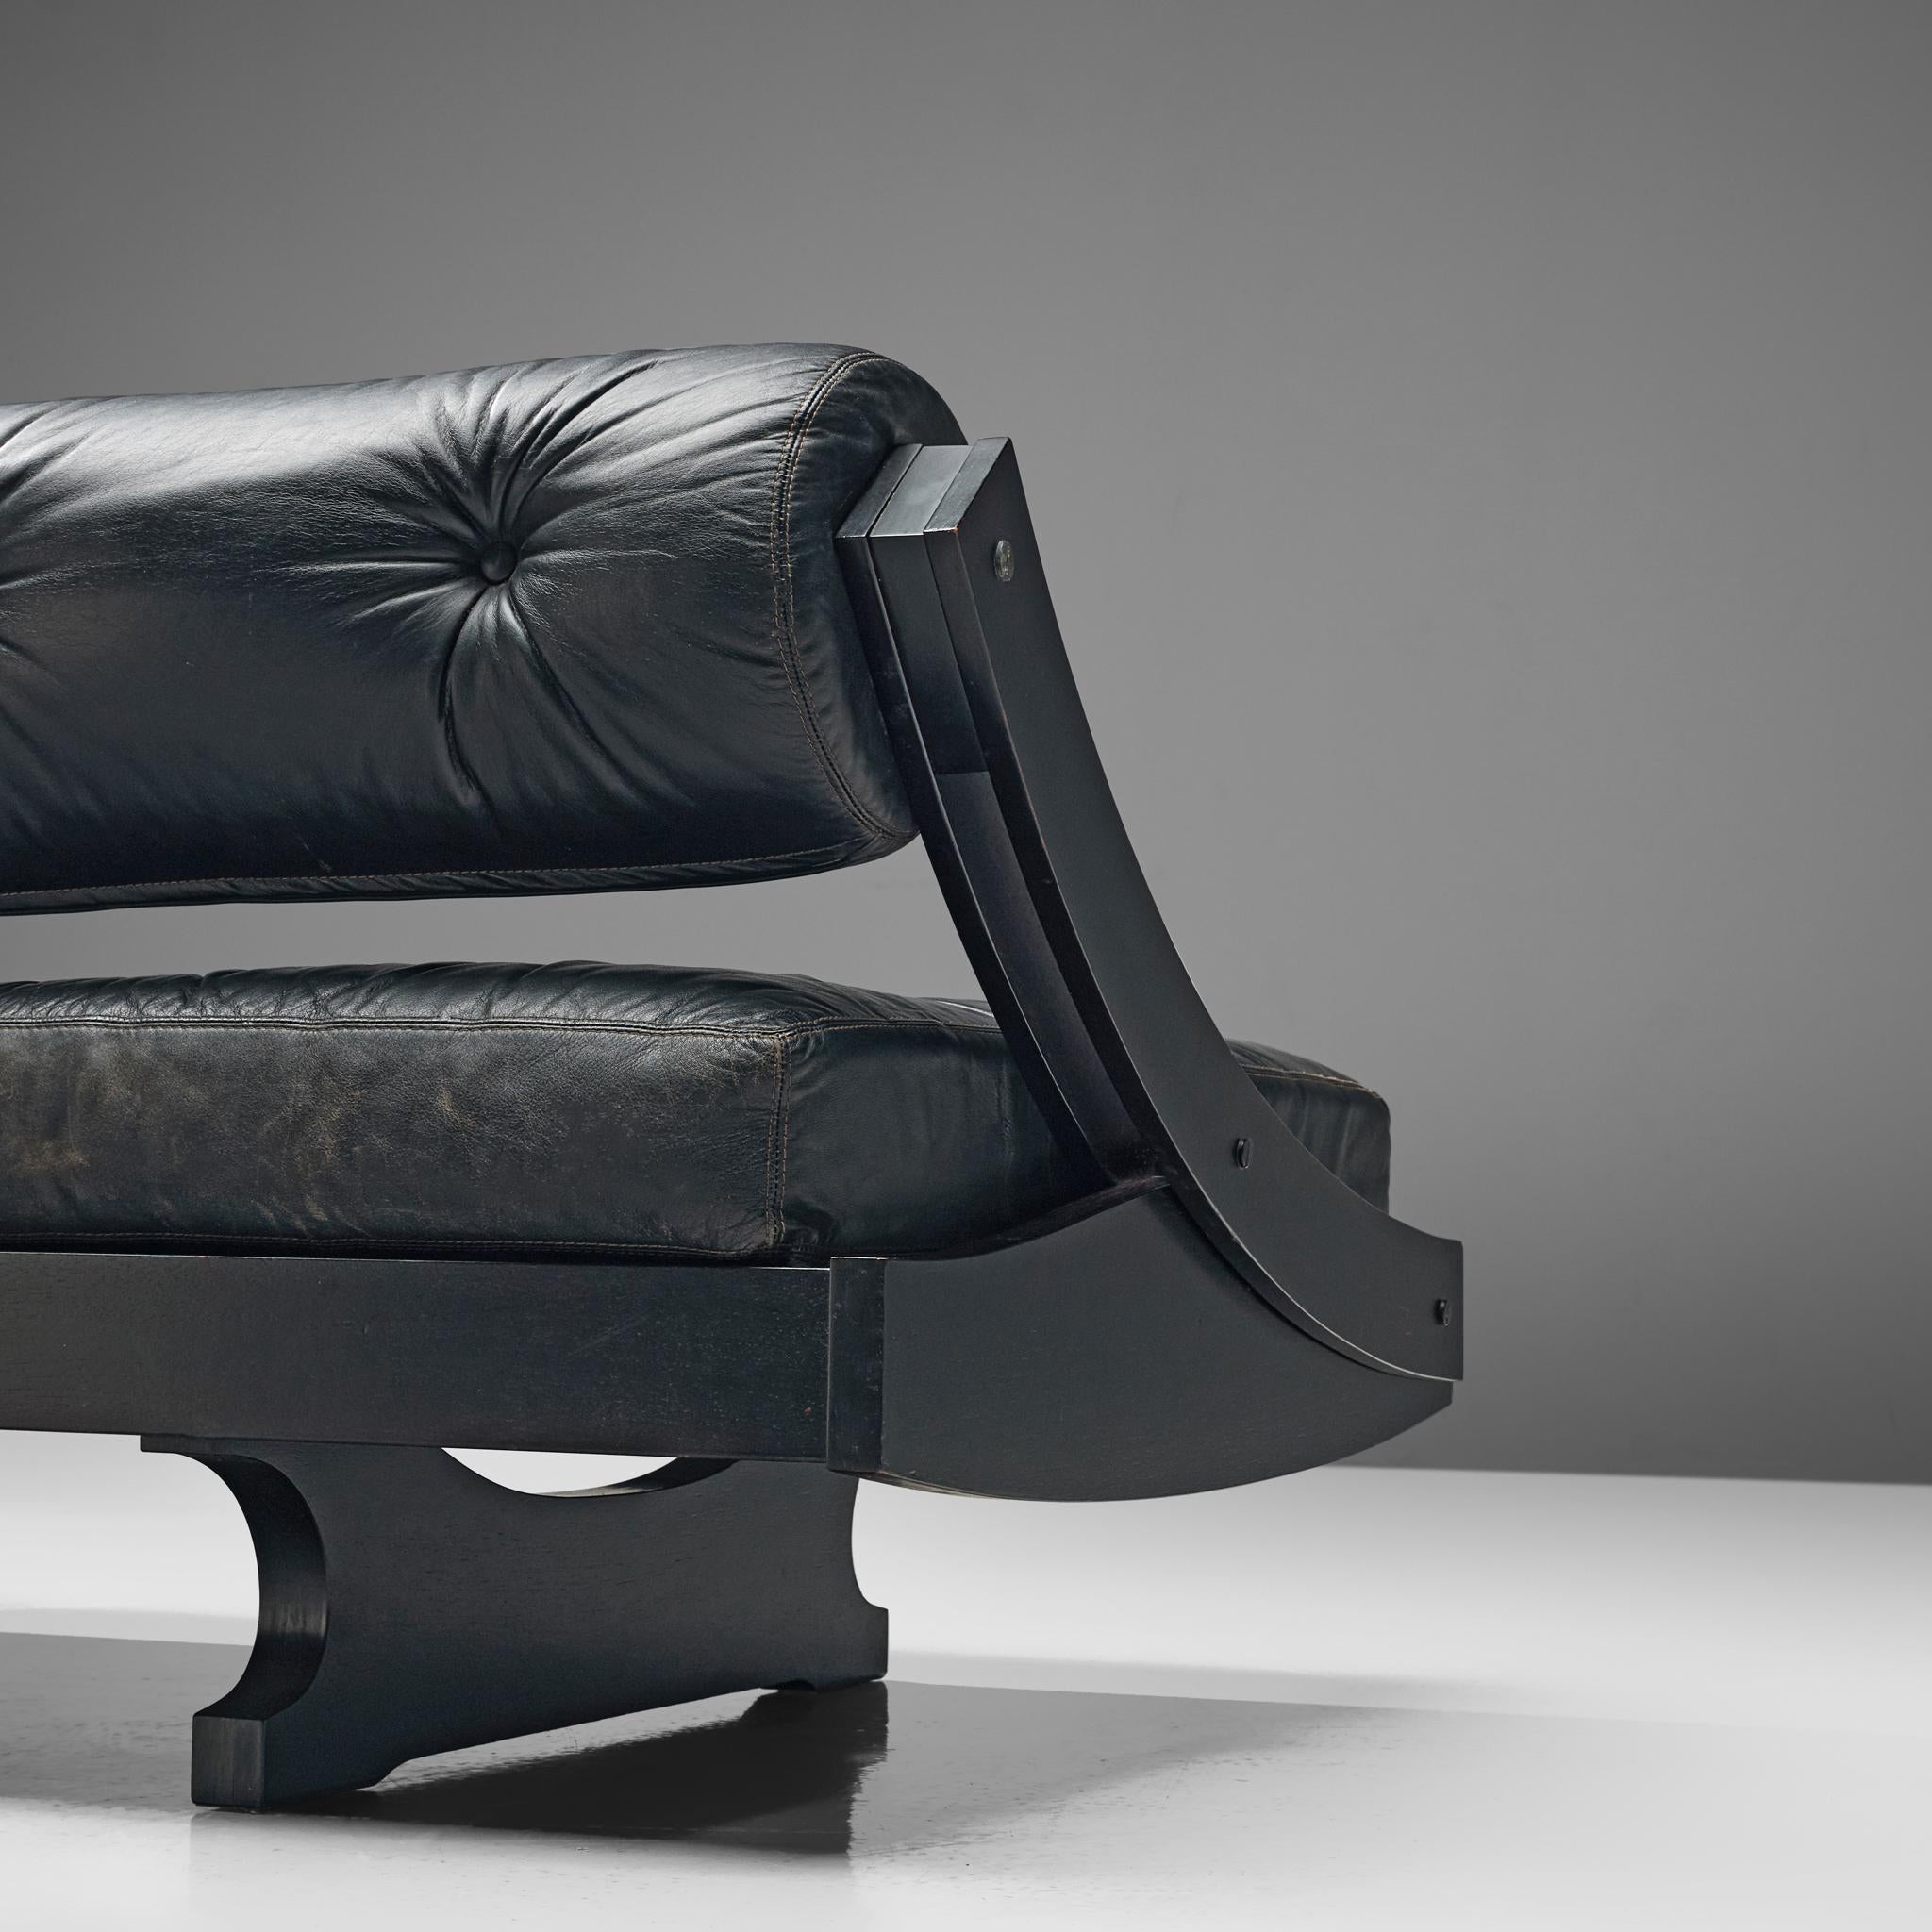 'GS-195' Sofa by Gianni Songia 1